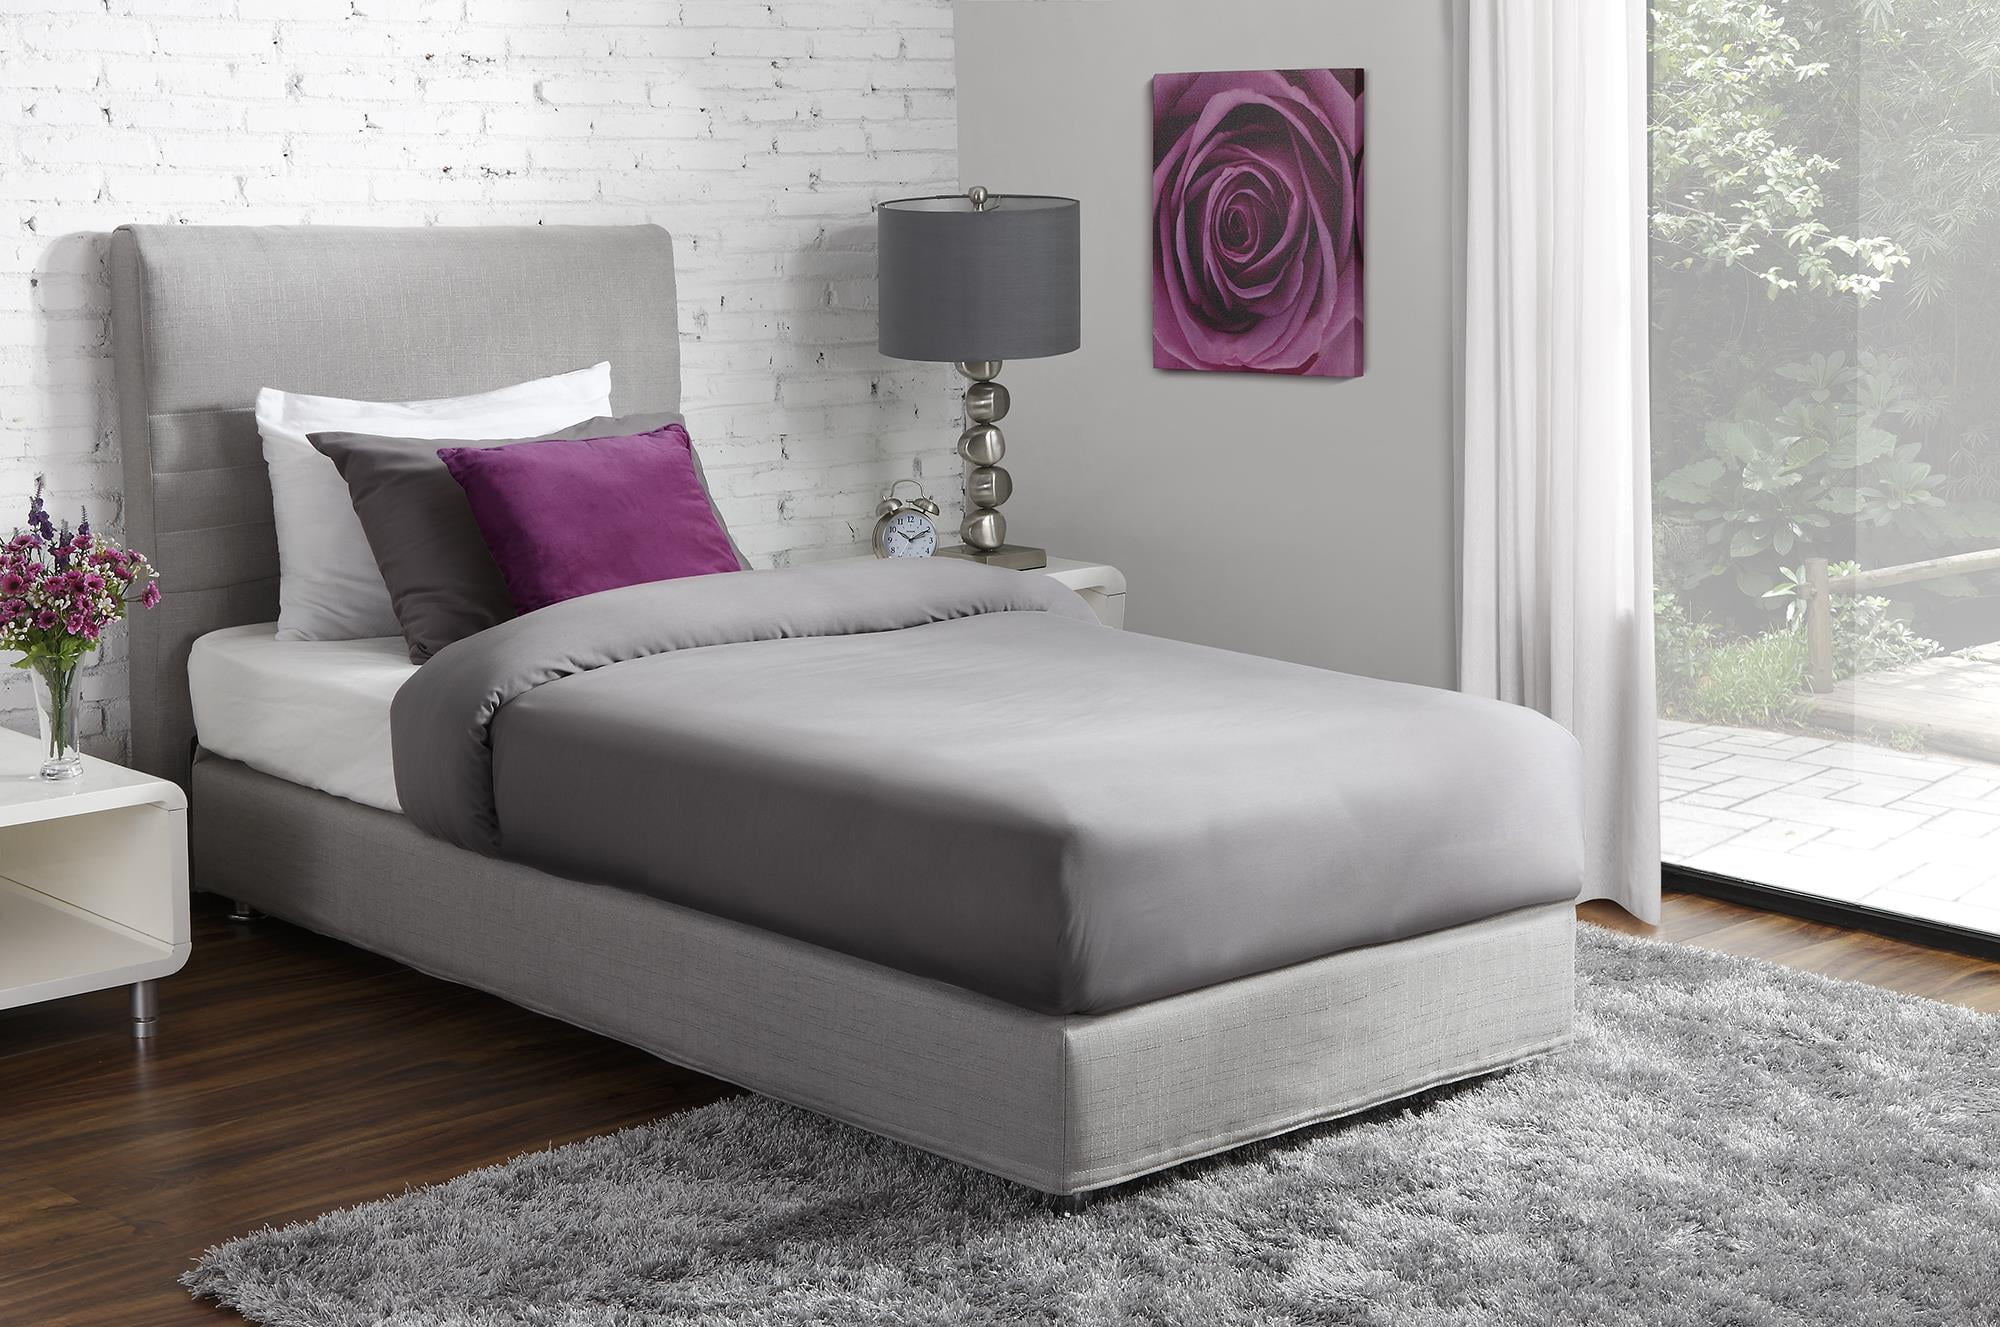 hybrid bunk bed mattress